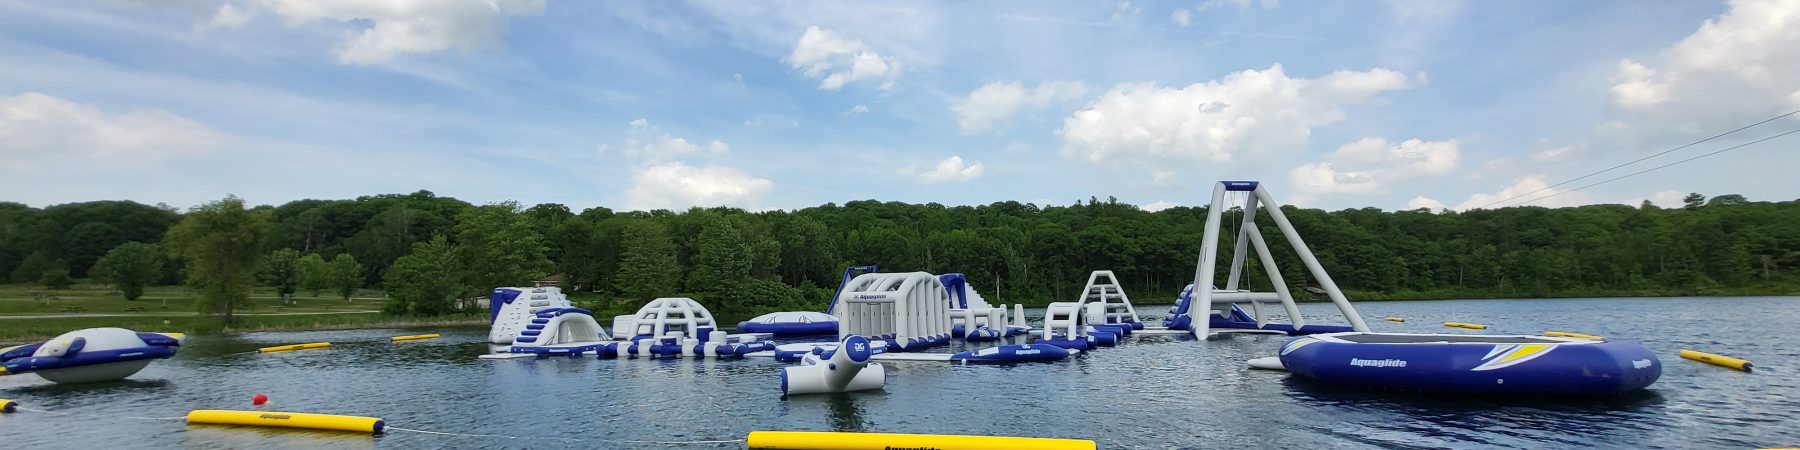 Floating Water Playground